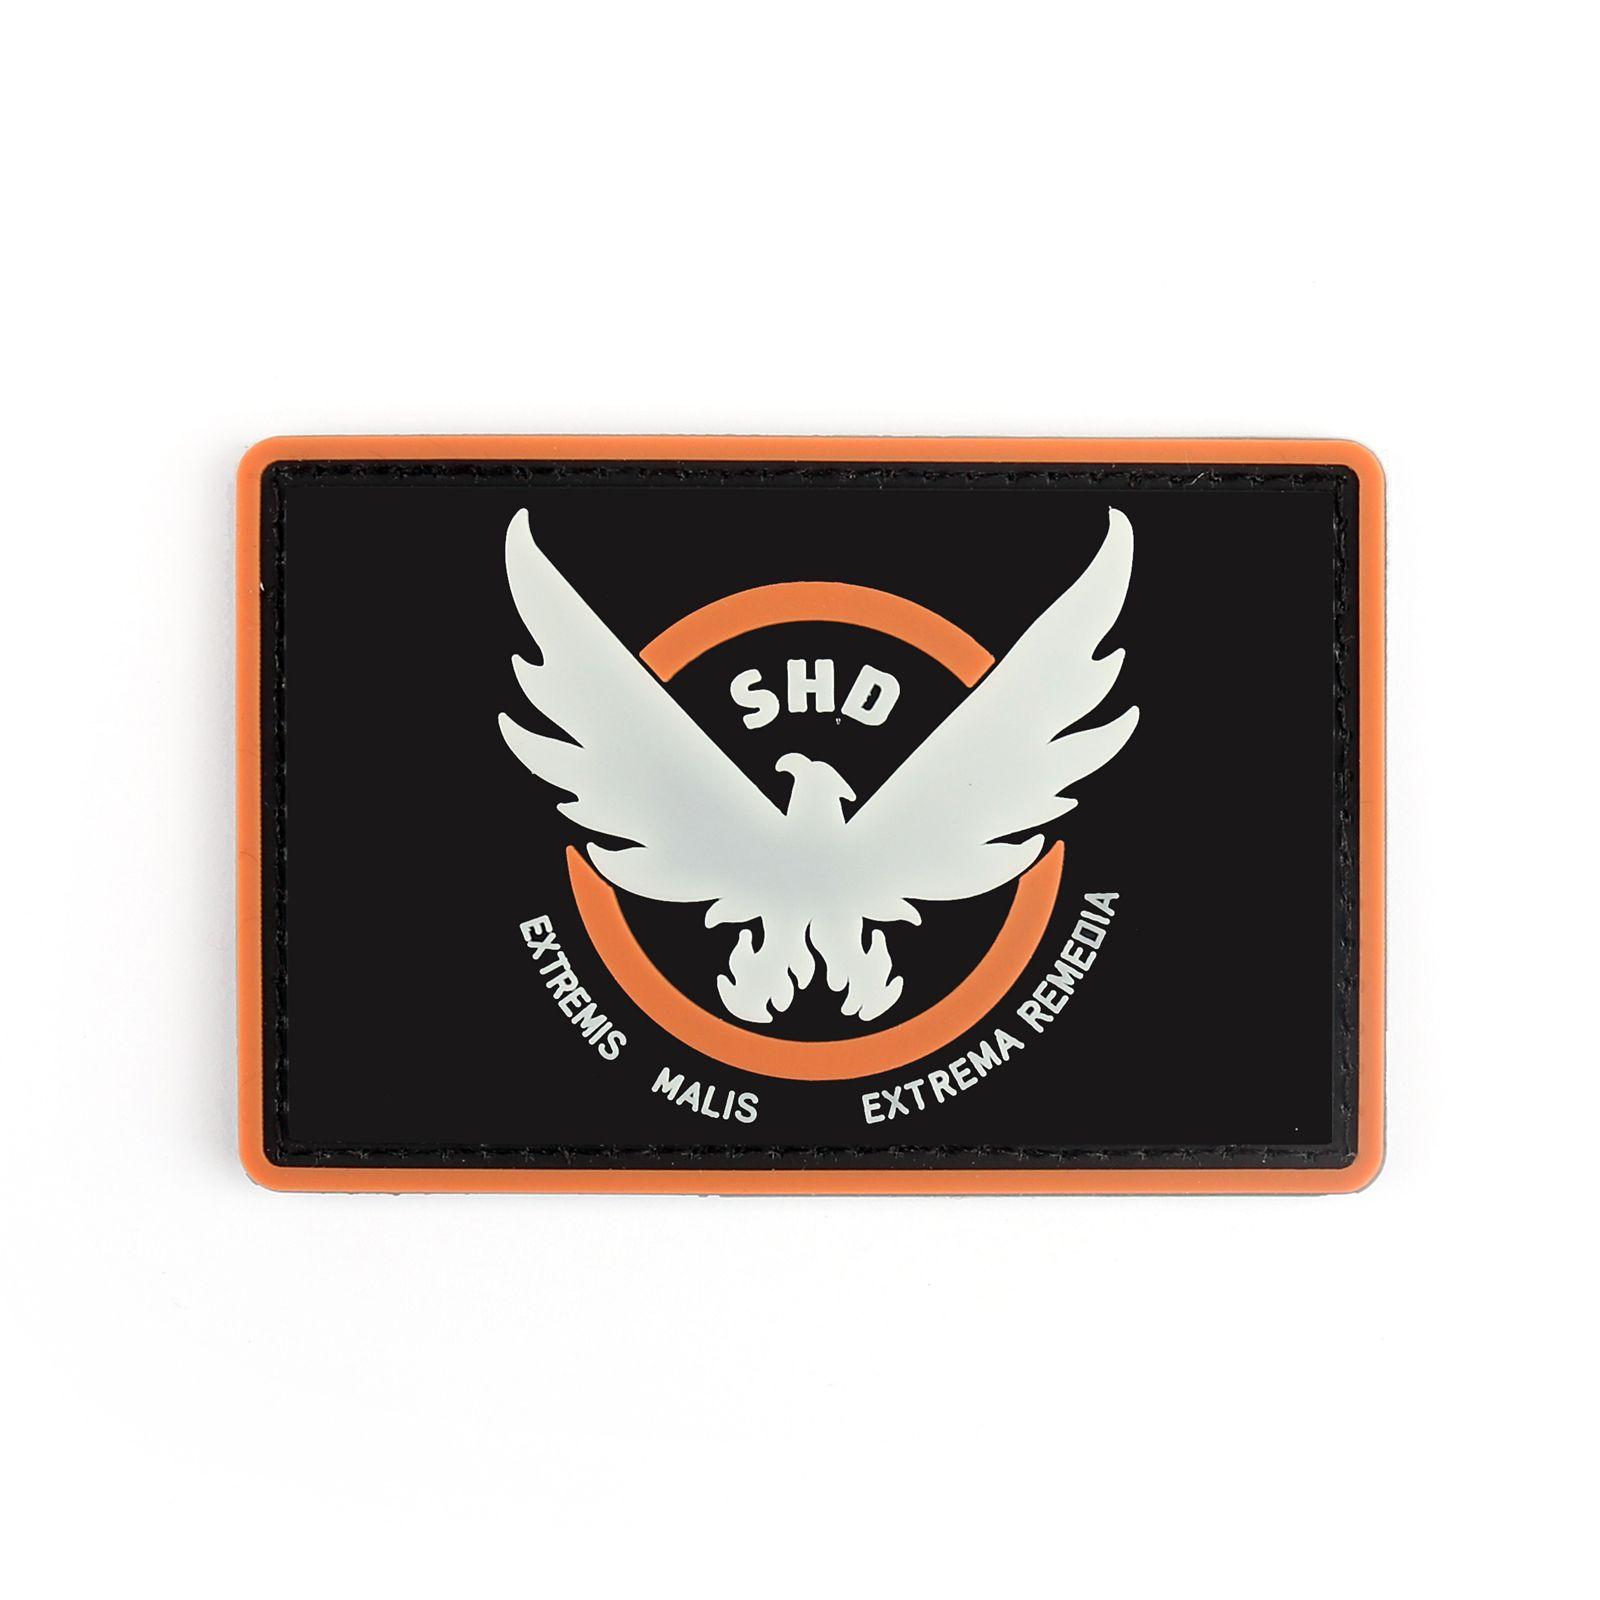 The Division Shd Logo - 10*6.5CM Tom Clancy's The Division Agent SHD logo PVC Hook Loop